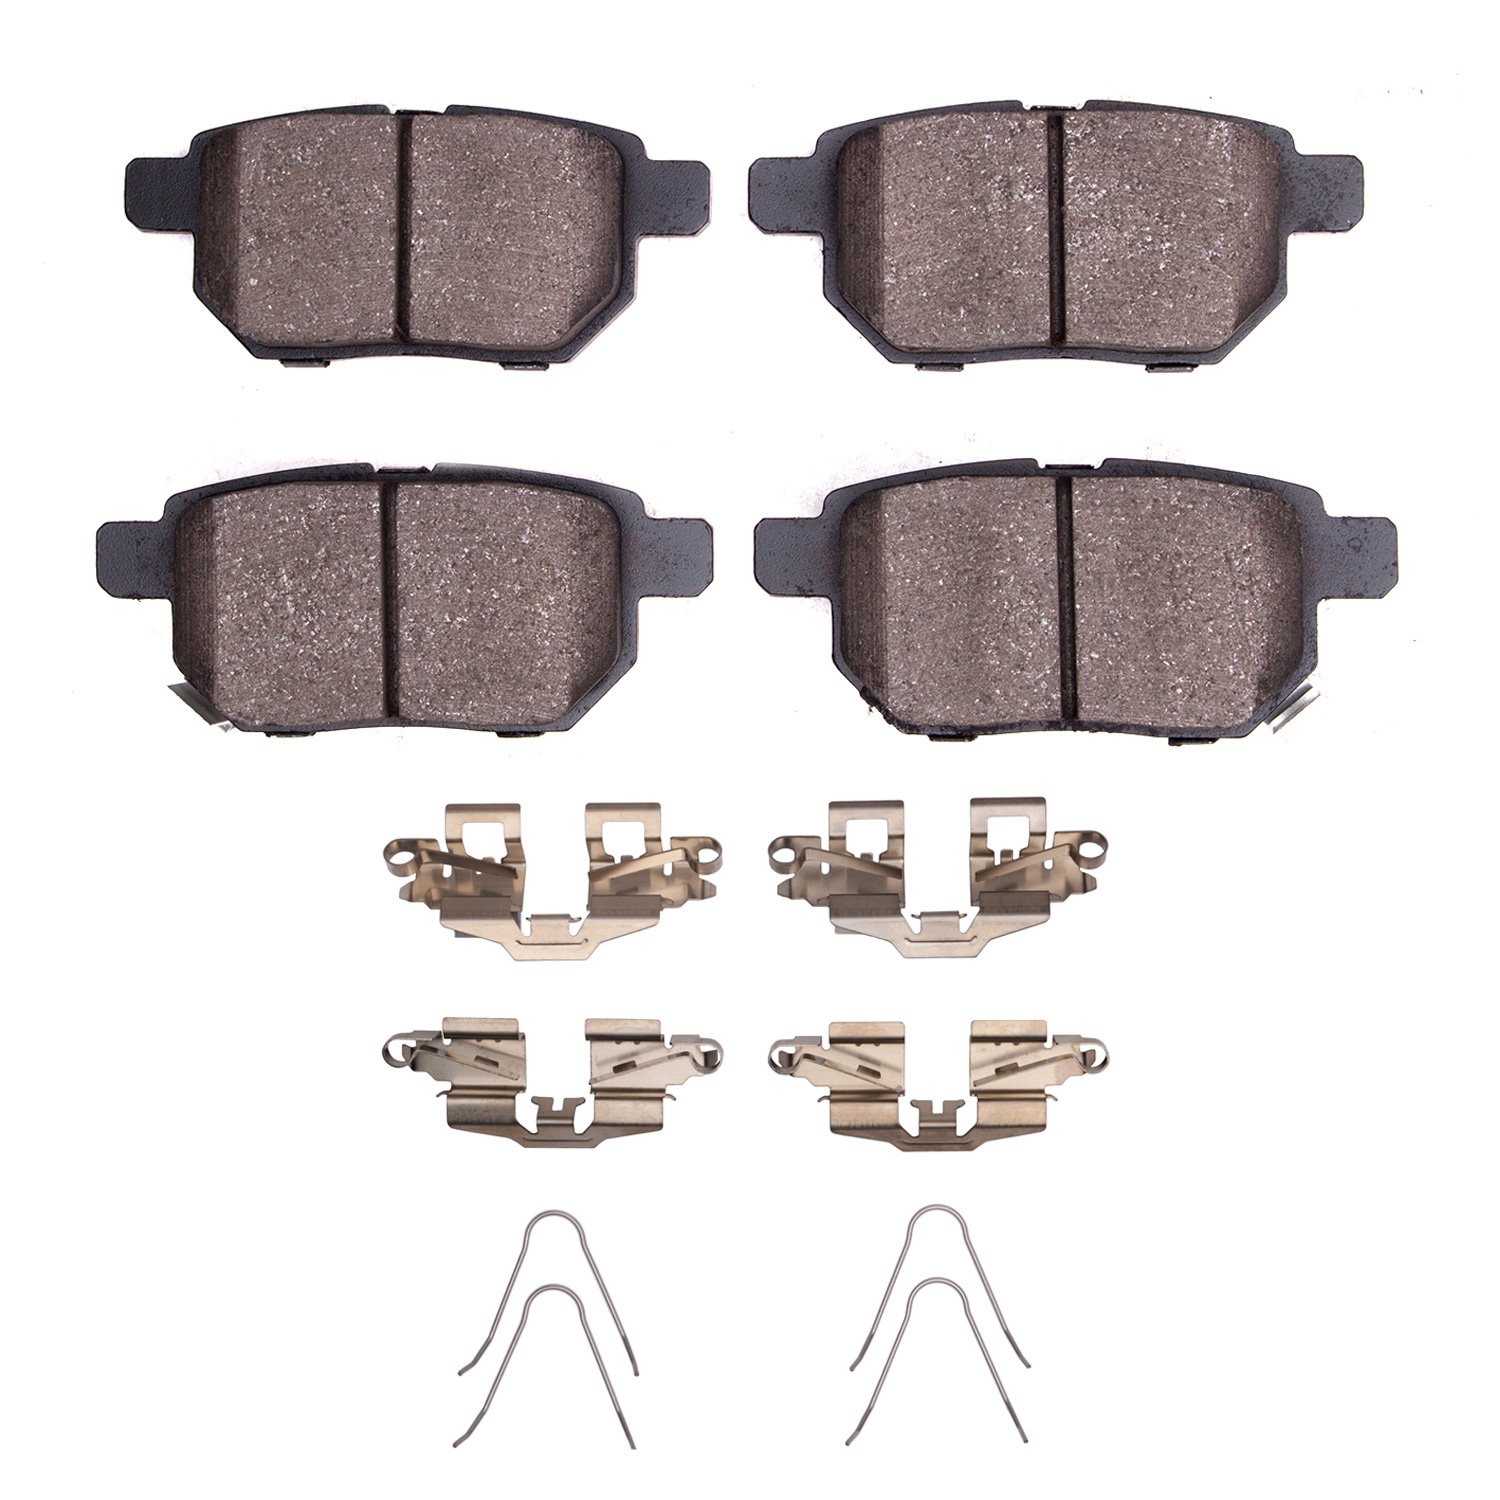 1310-1423-01 3000-Series Ceramic Brake Pads & Hardware Kit, Fits Select Multiple Makes/Models, Position: Rear